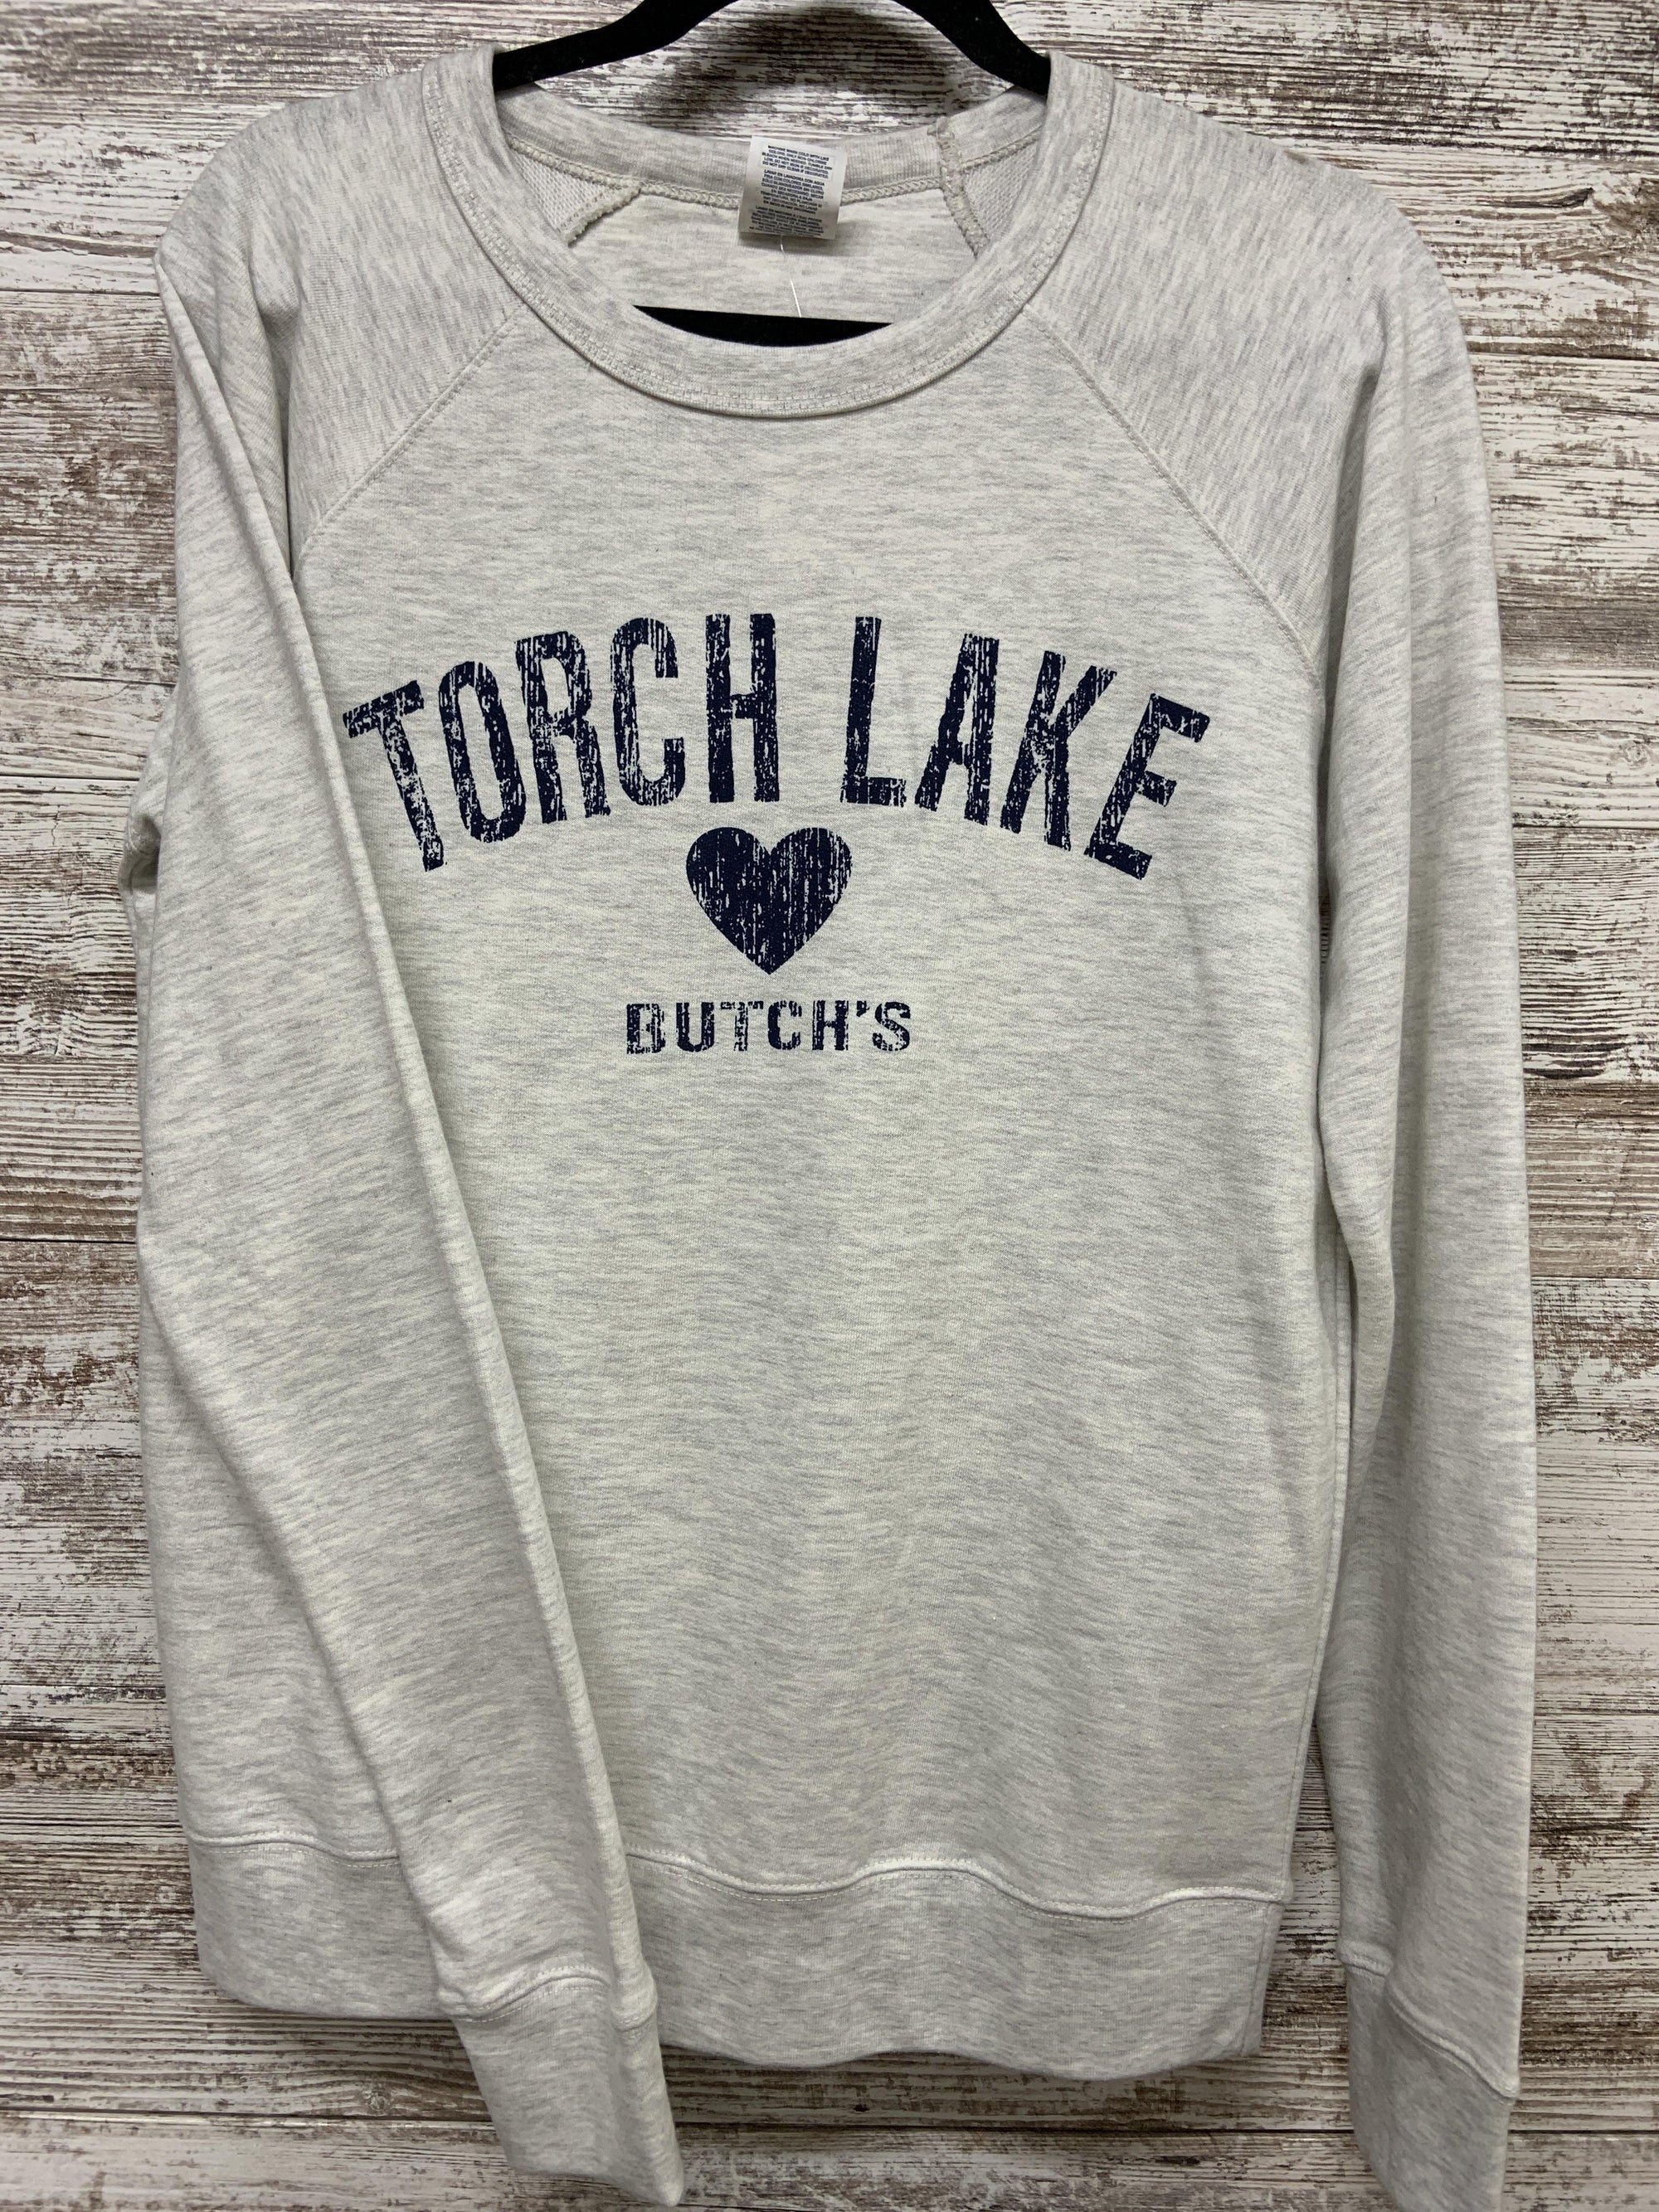 Torch Lake Love - Butch's Tackle & Marine - Pontoon Rentals on Torch Lake